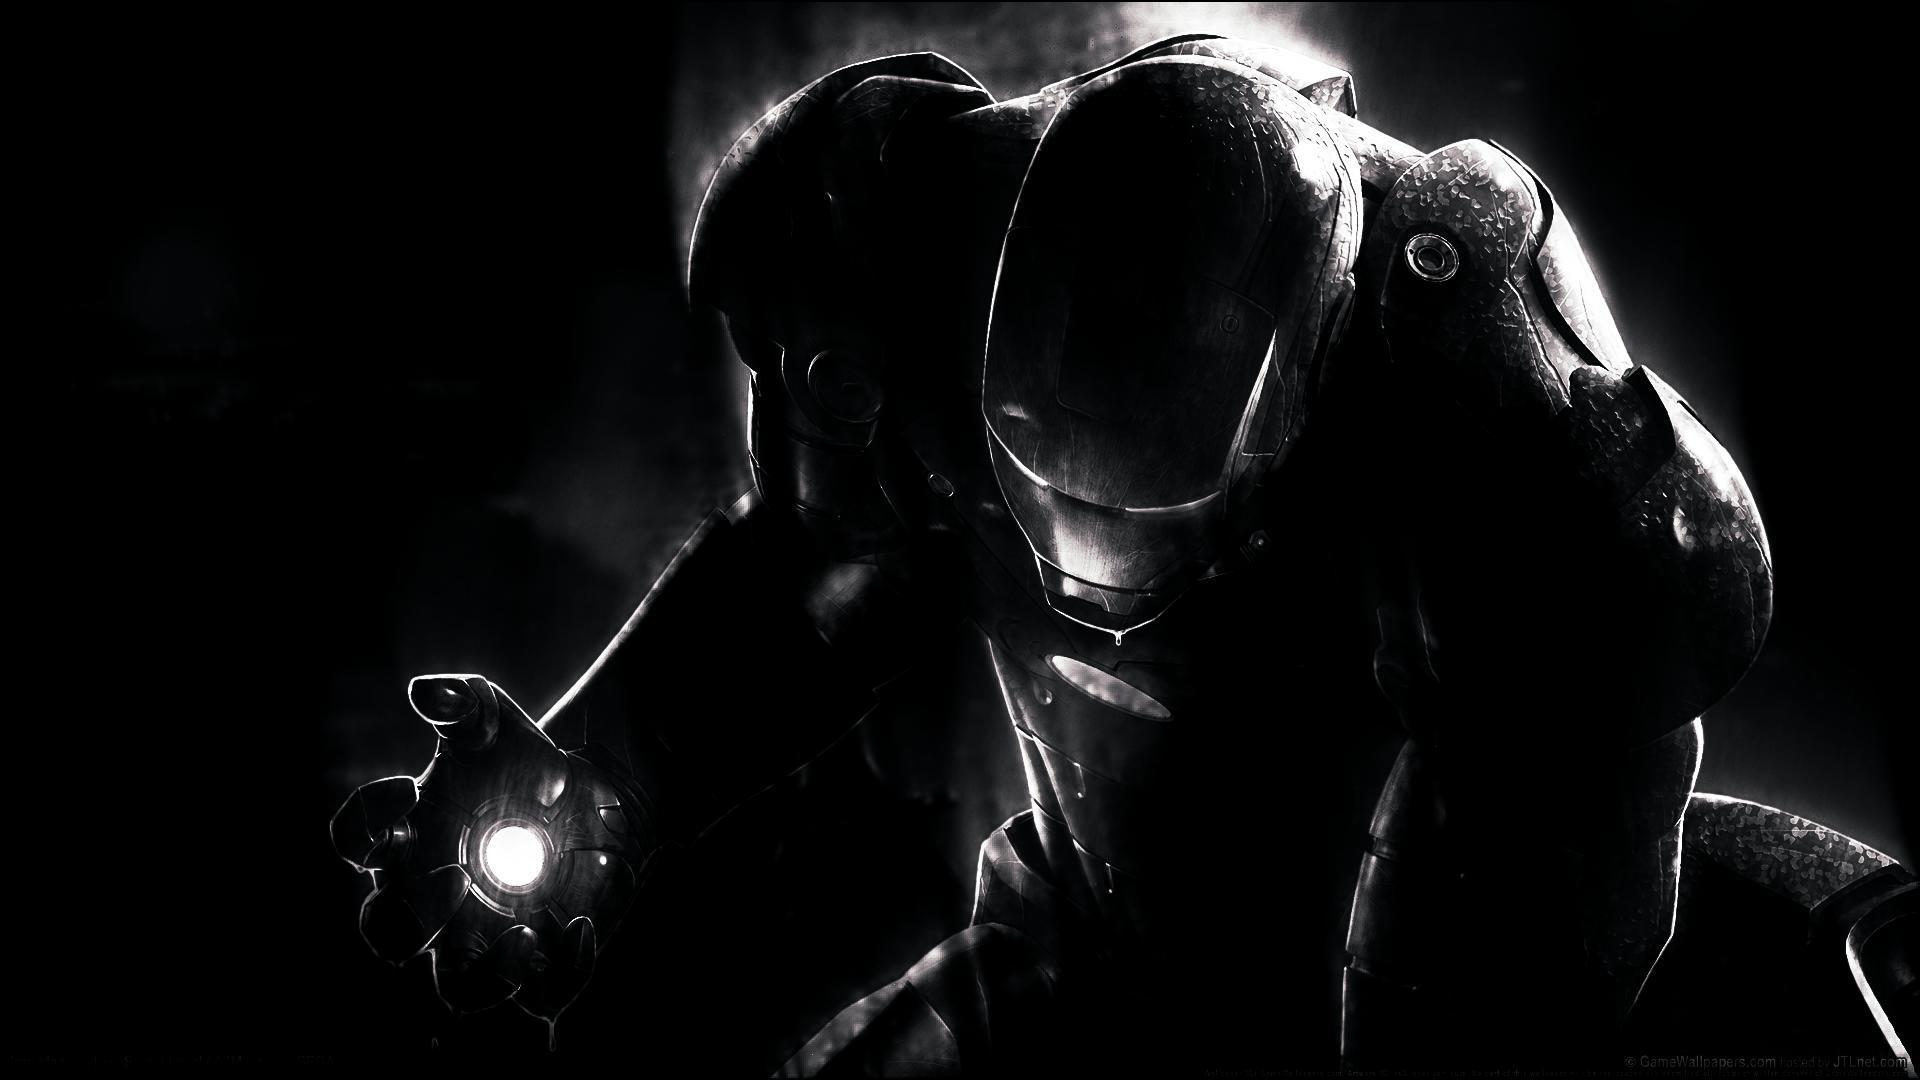 Iron Man HD Wallpaper